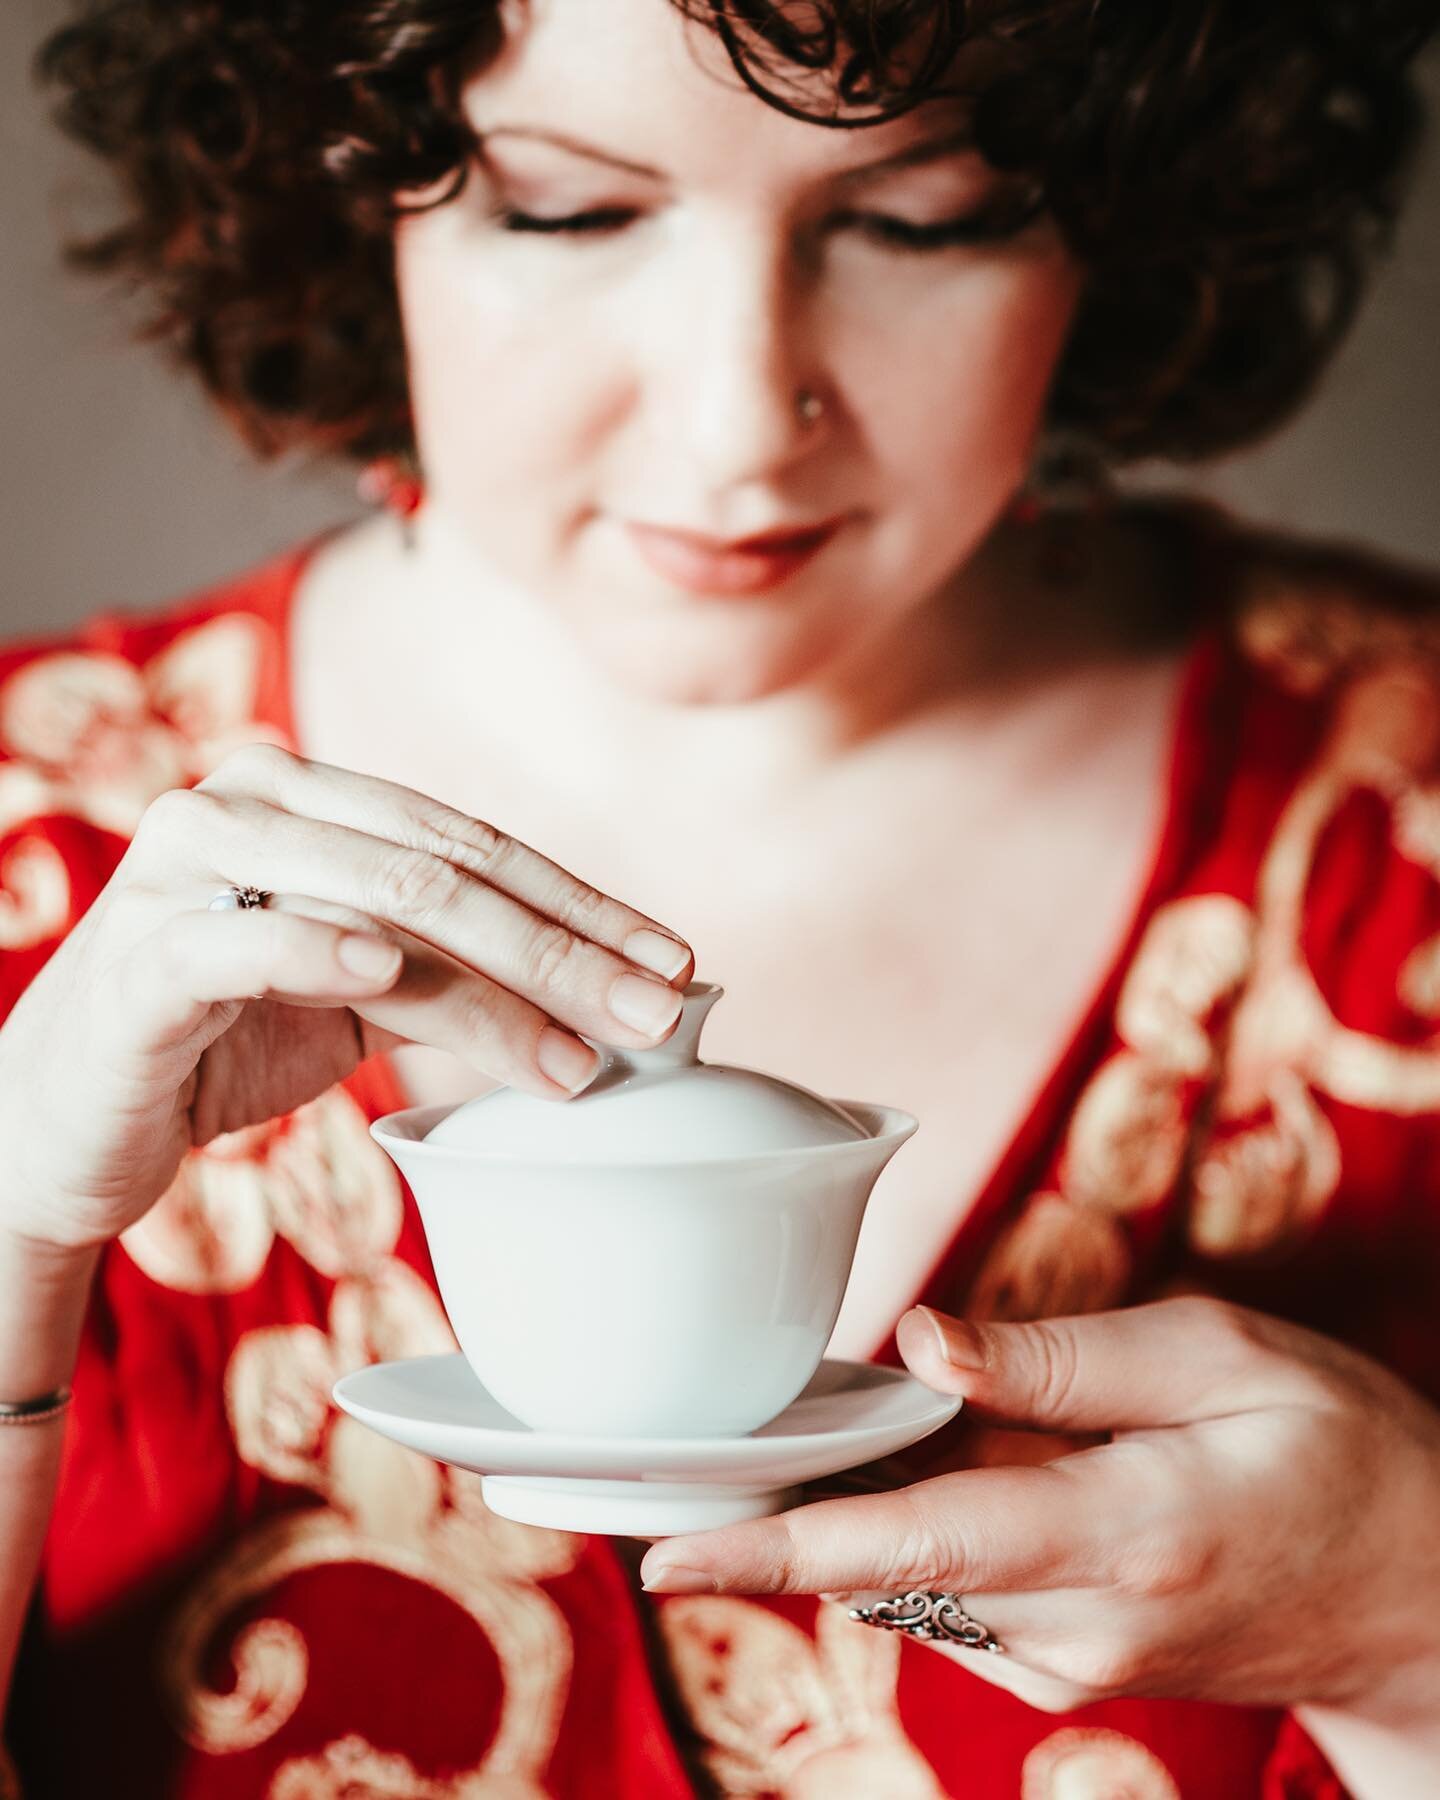 ．
&ldquo;Have a good cup of tea,
Knowing how to drink good tea
Is a kind of blessing&rdquo;
-Lu Xun

有好茶喝
会喝好茶
是一种清福
-魯迅

{tea portrait &copy;Kristina Clark 2024}

#tea
#gaiwan 
#porcelain 
#teaphotography 
#teaware 
#jingdezhen 
#jingdezhenporcelain